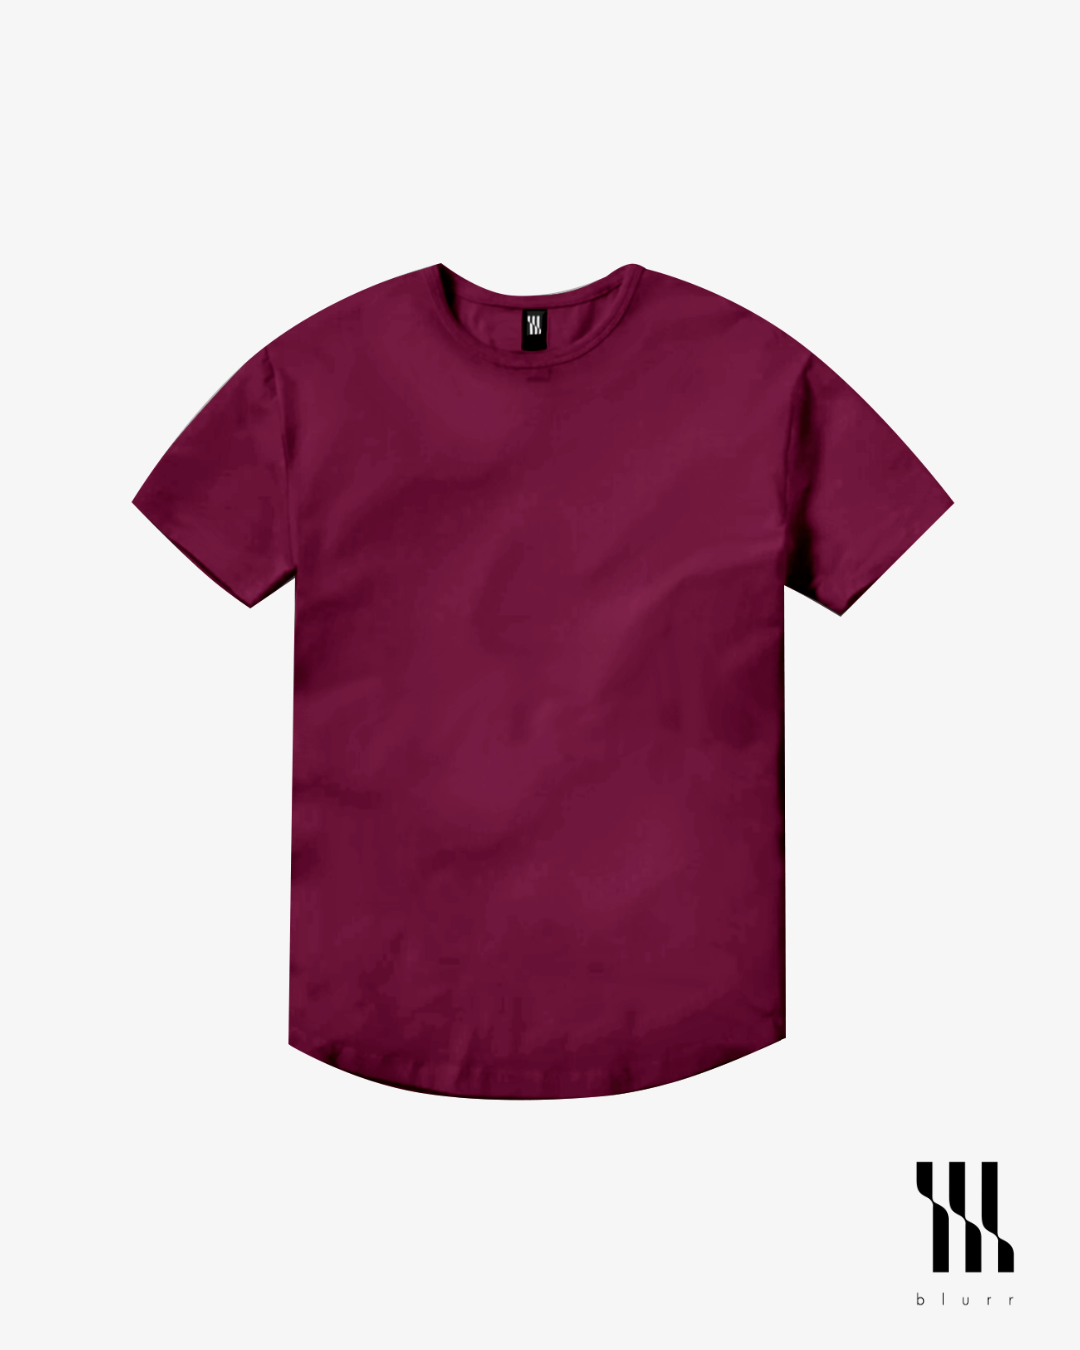 Cherry Wine T-shirt - Short Sleeve Crew Neck Curved Bottom